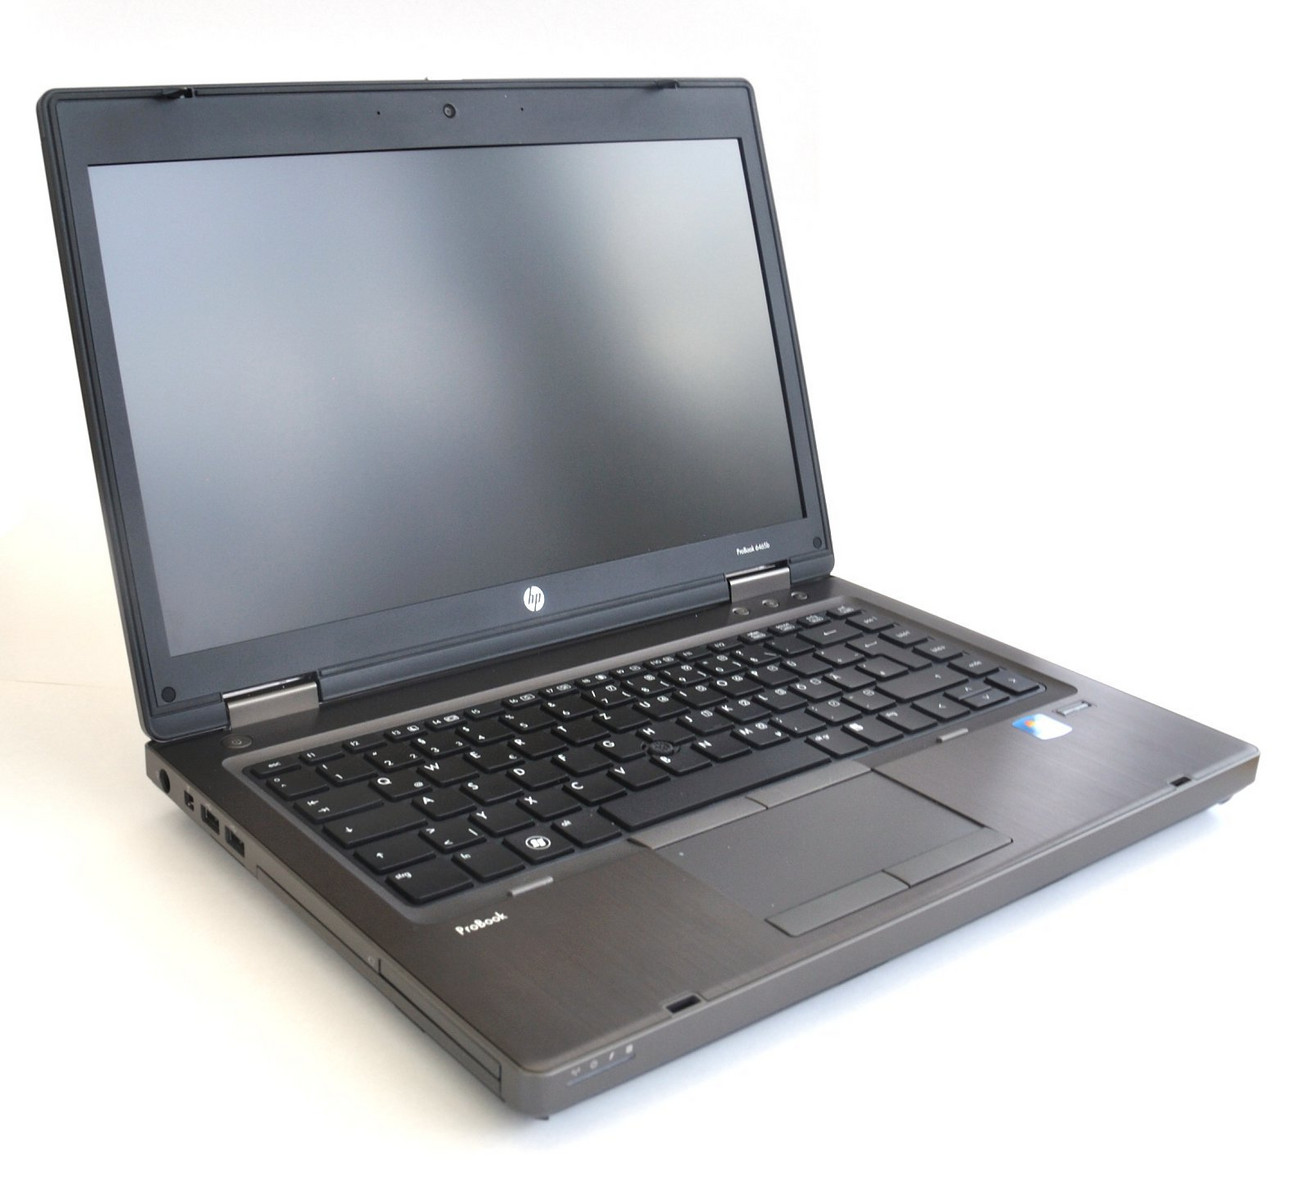 HP ProBook 6465b LY433EA -  External Reviews